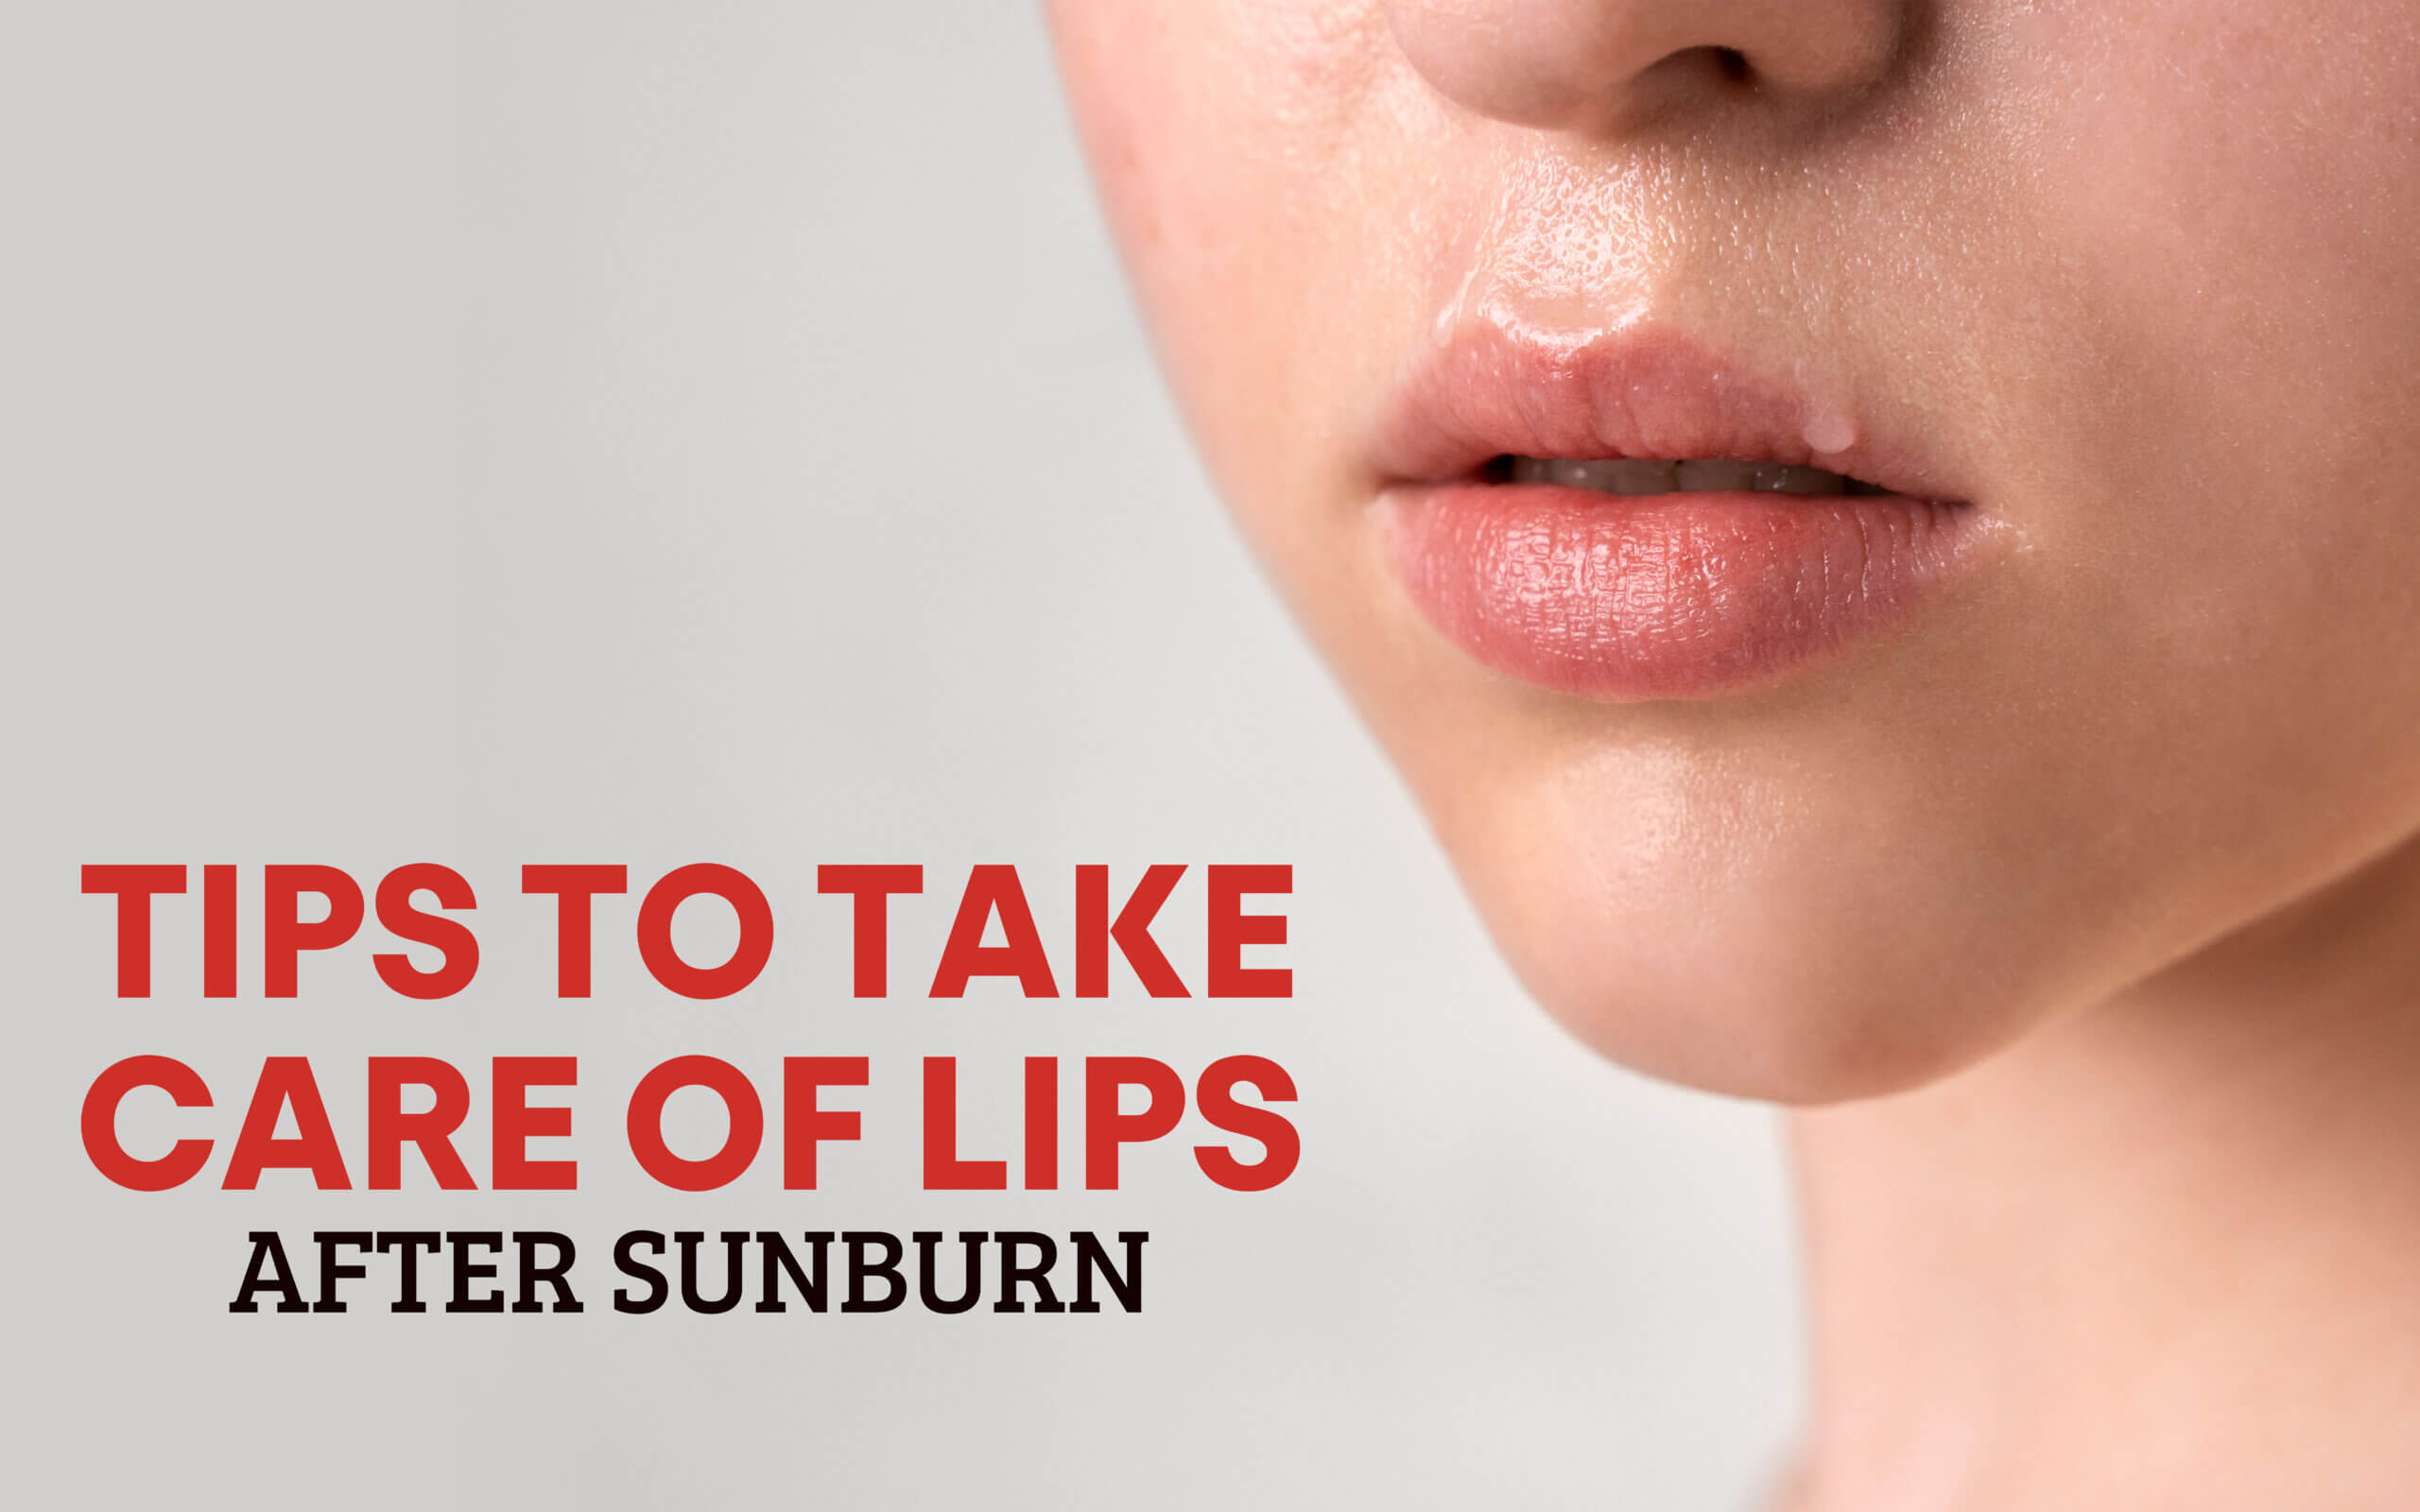 Take Care of Lips after Sunburn